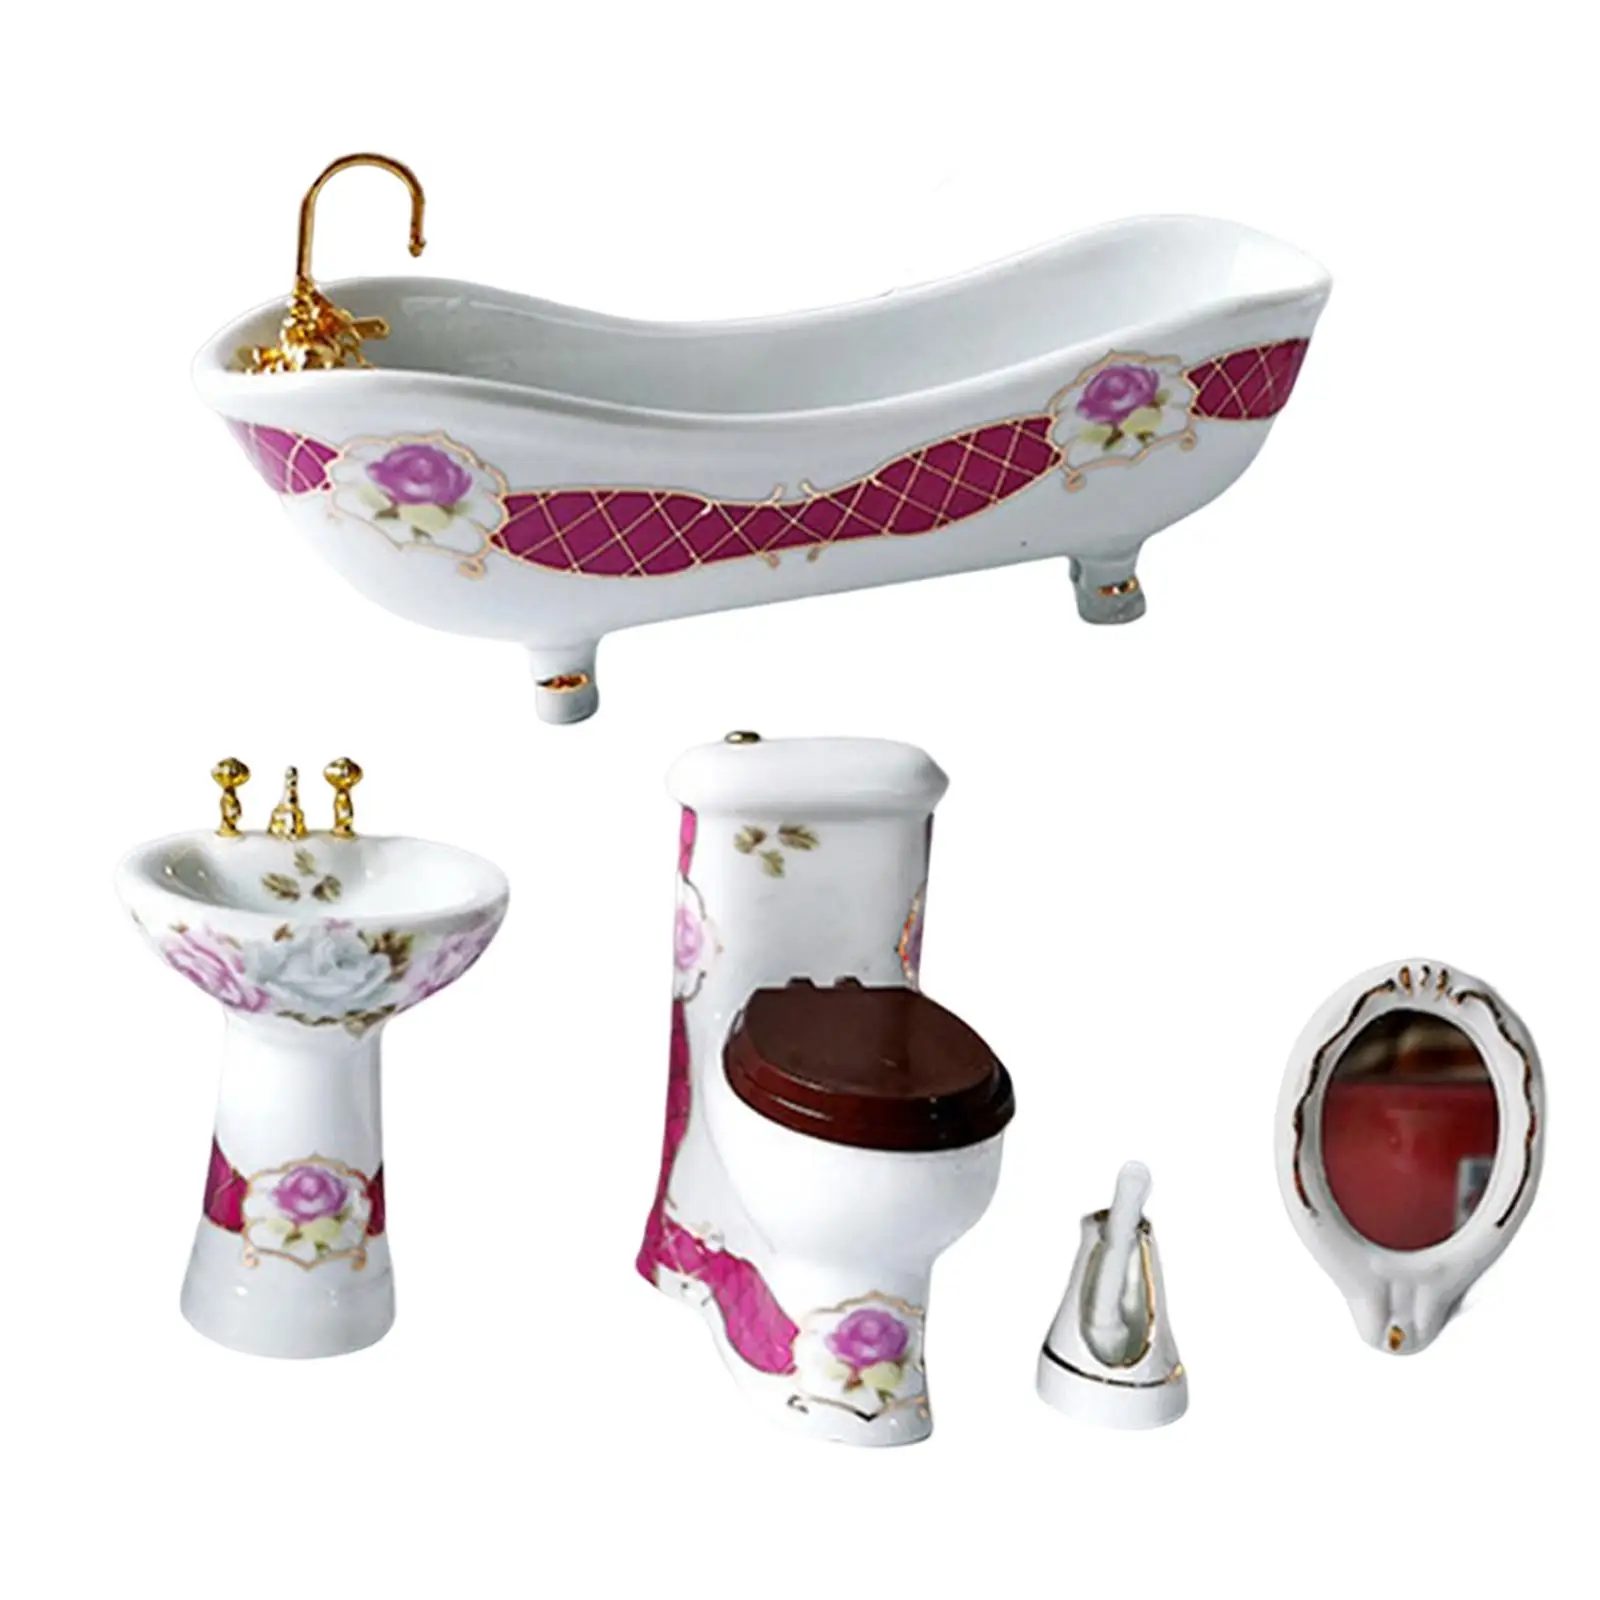 1/12 Scale Dollhouse Bathroom Set, Dollhouse Decoration Accessories for Bathroom